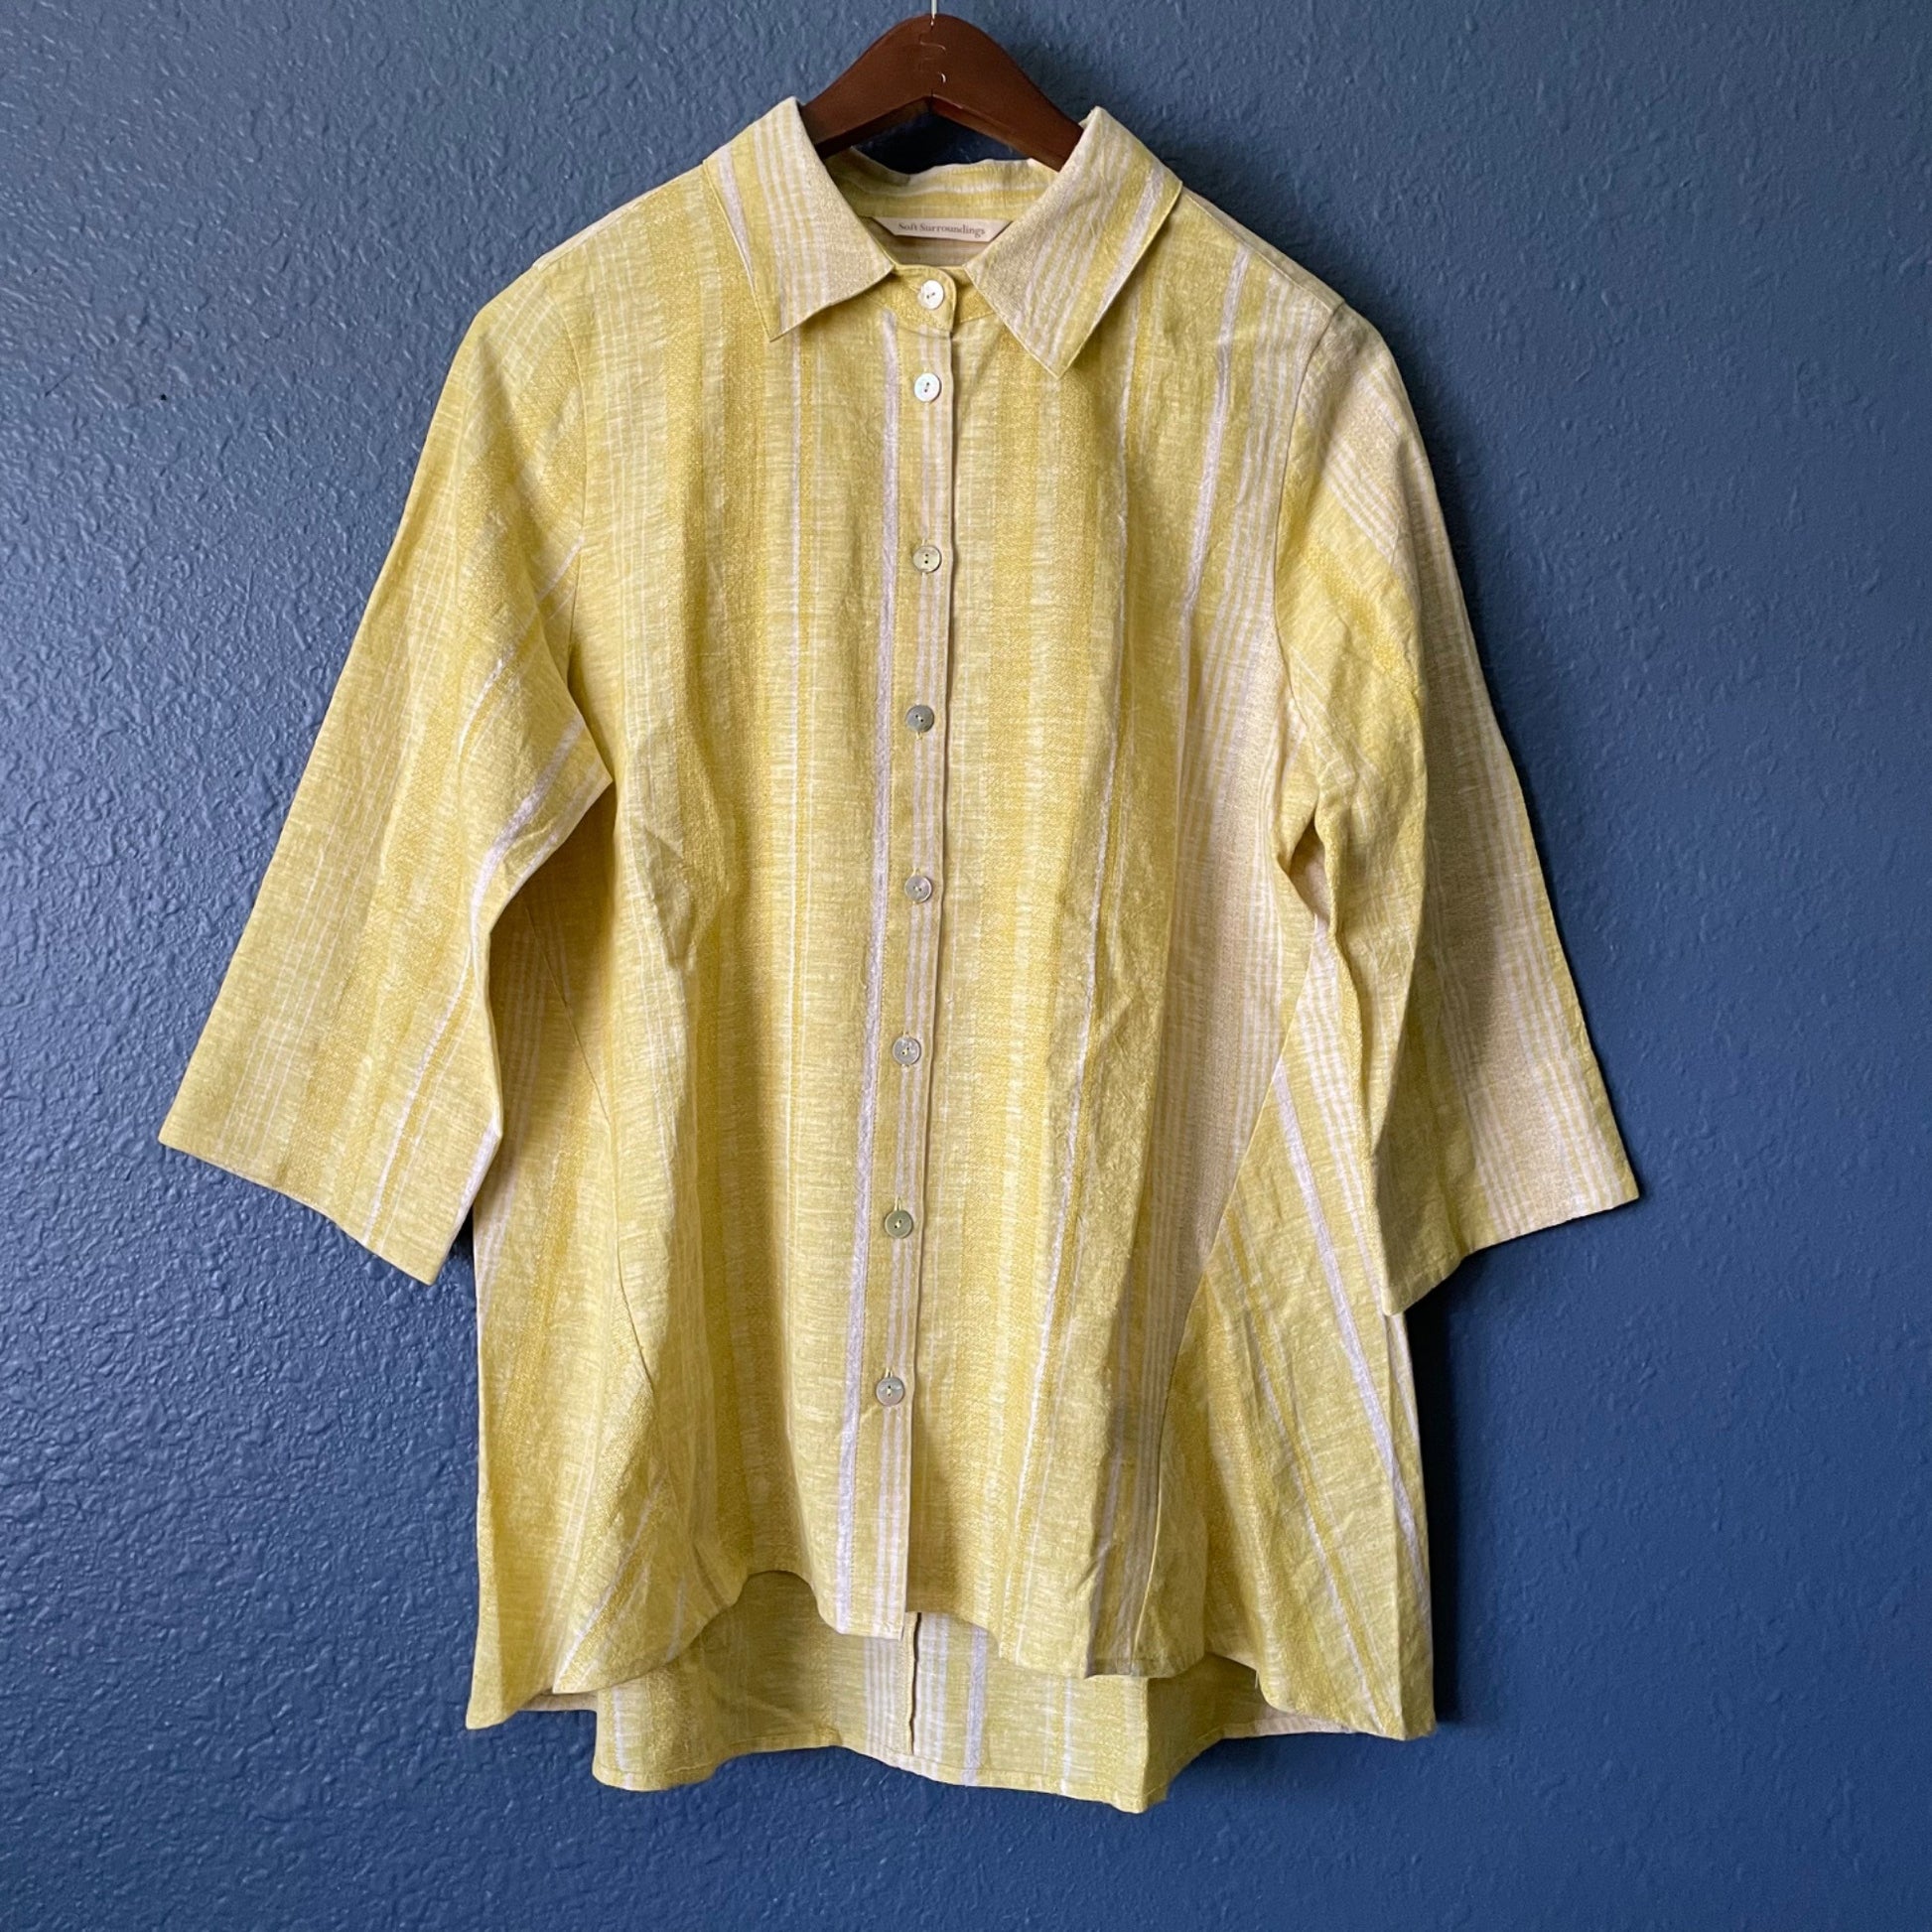 NWOT Soft Surroundings Livienne Linen Yellow Striped Shirt Women's